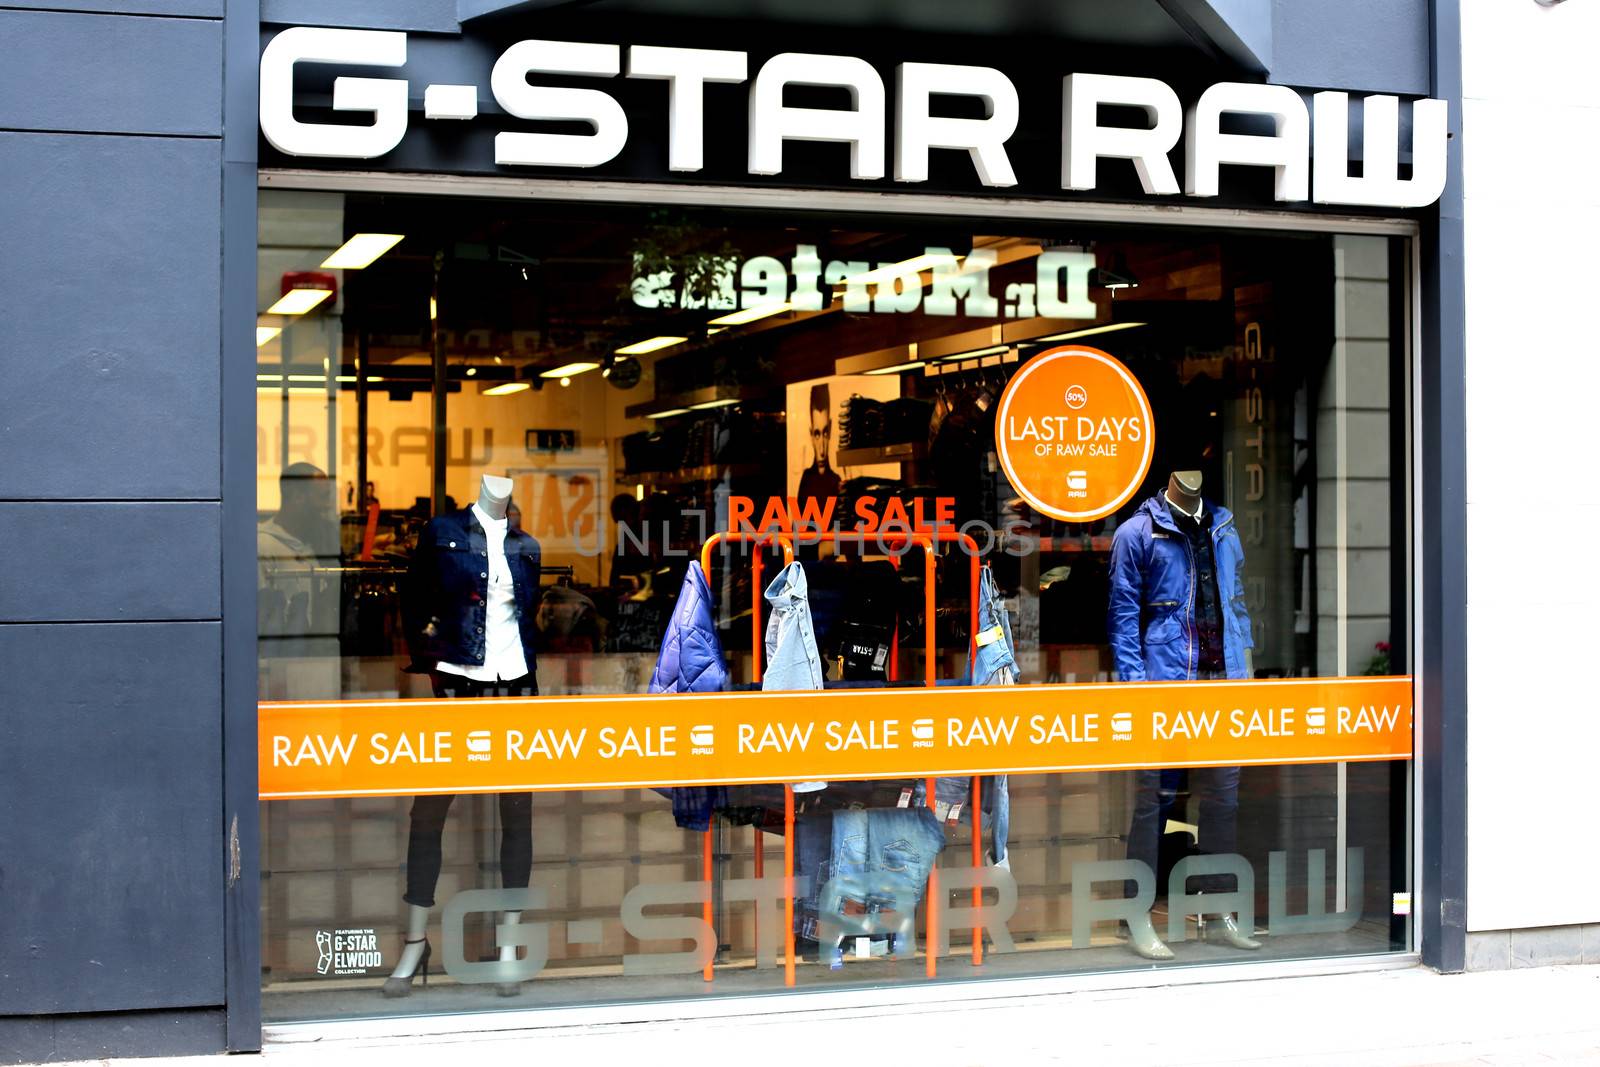 G-Star Raw Shop Sign Carnaby Street London by Whiteboxmedia